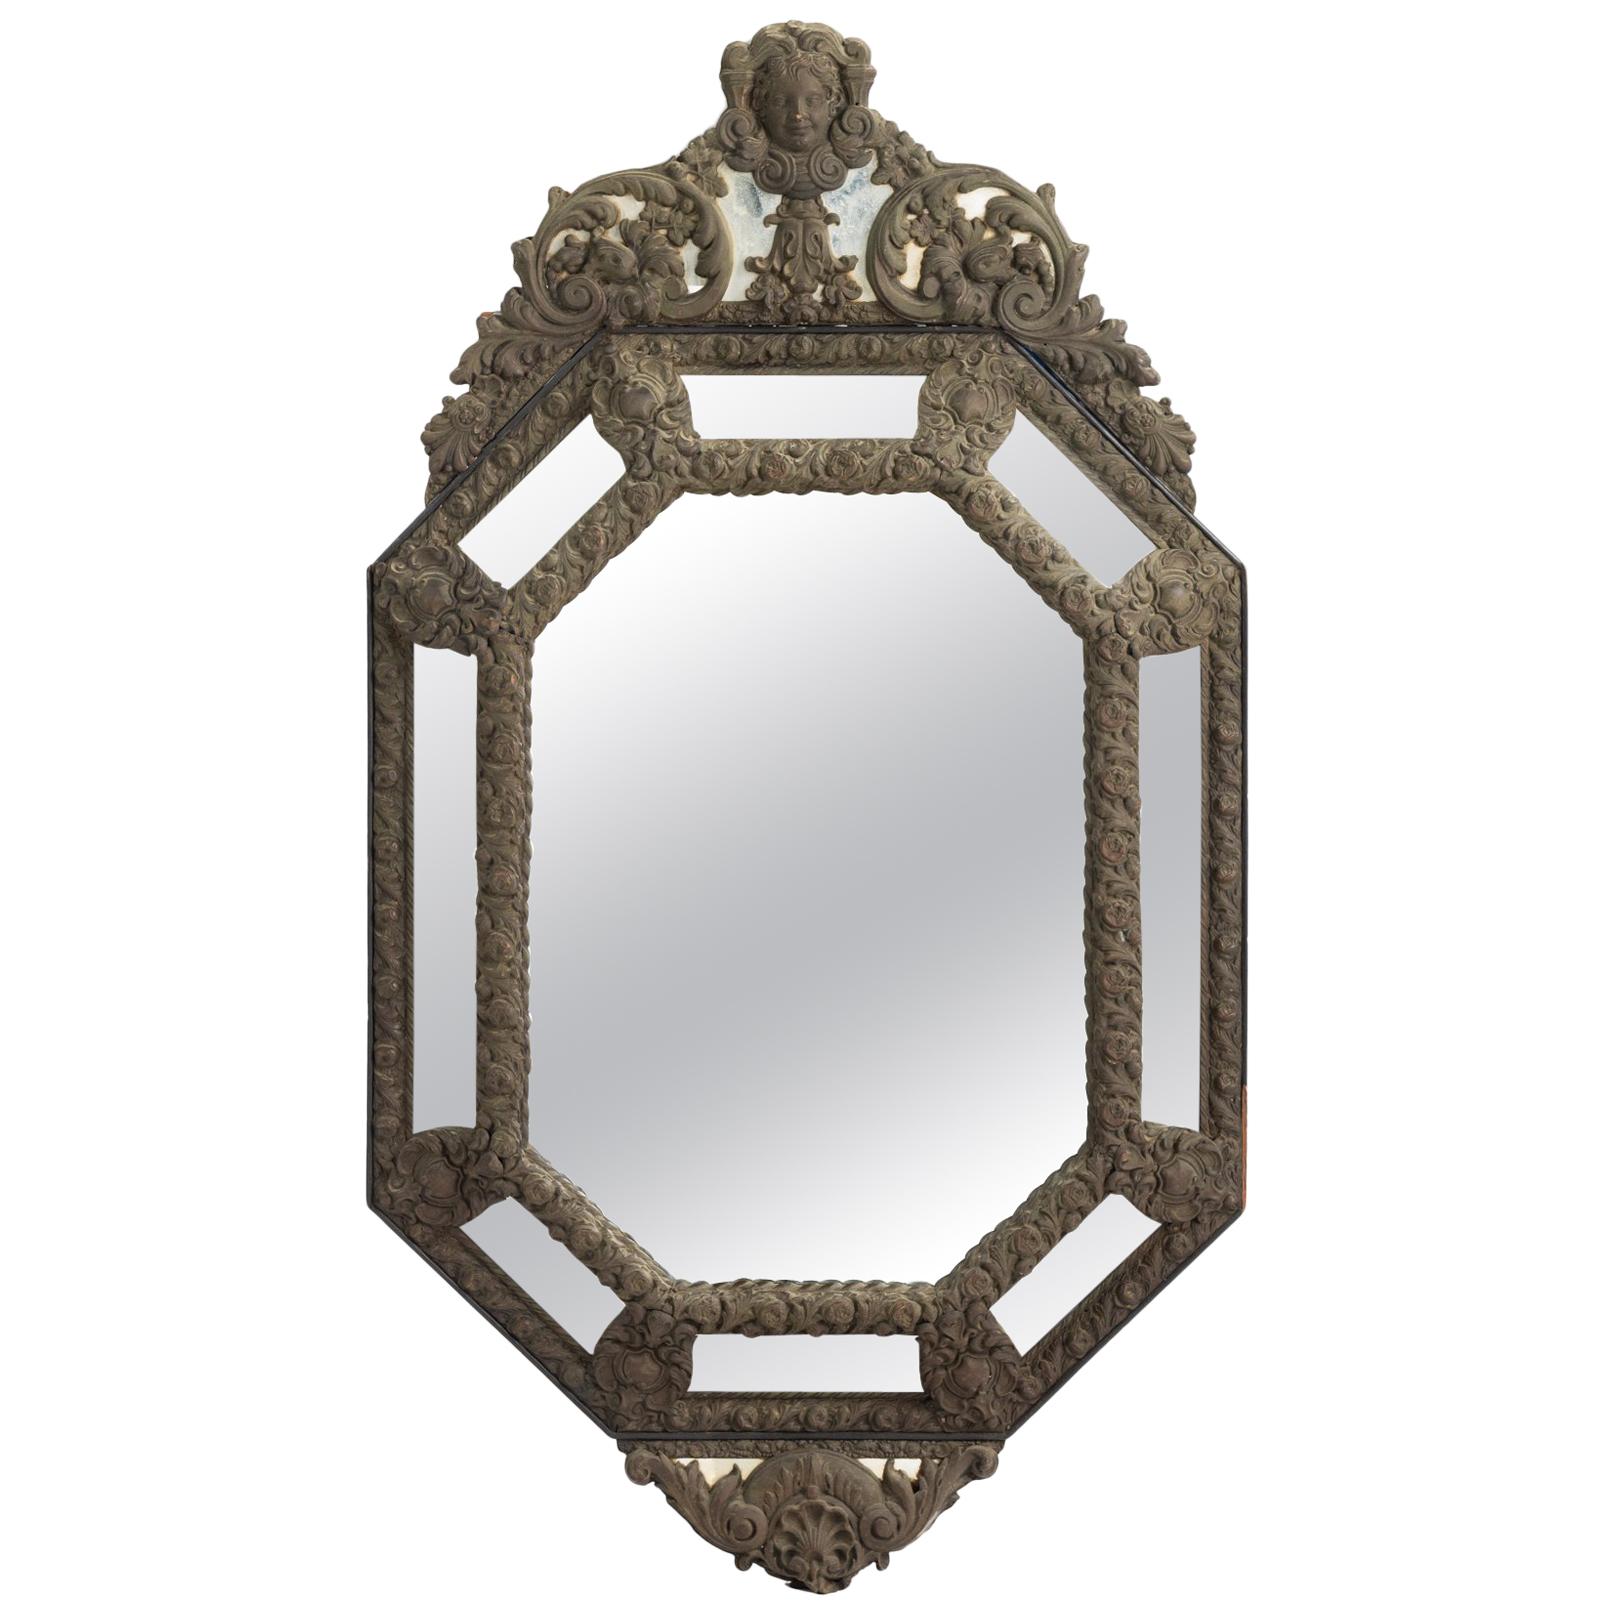 Hammered Bronze Mirror, Italy, circa 1870